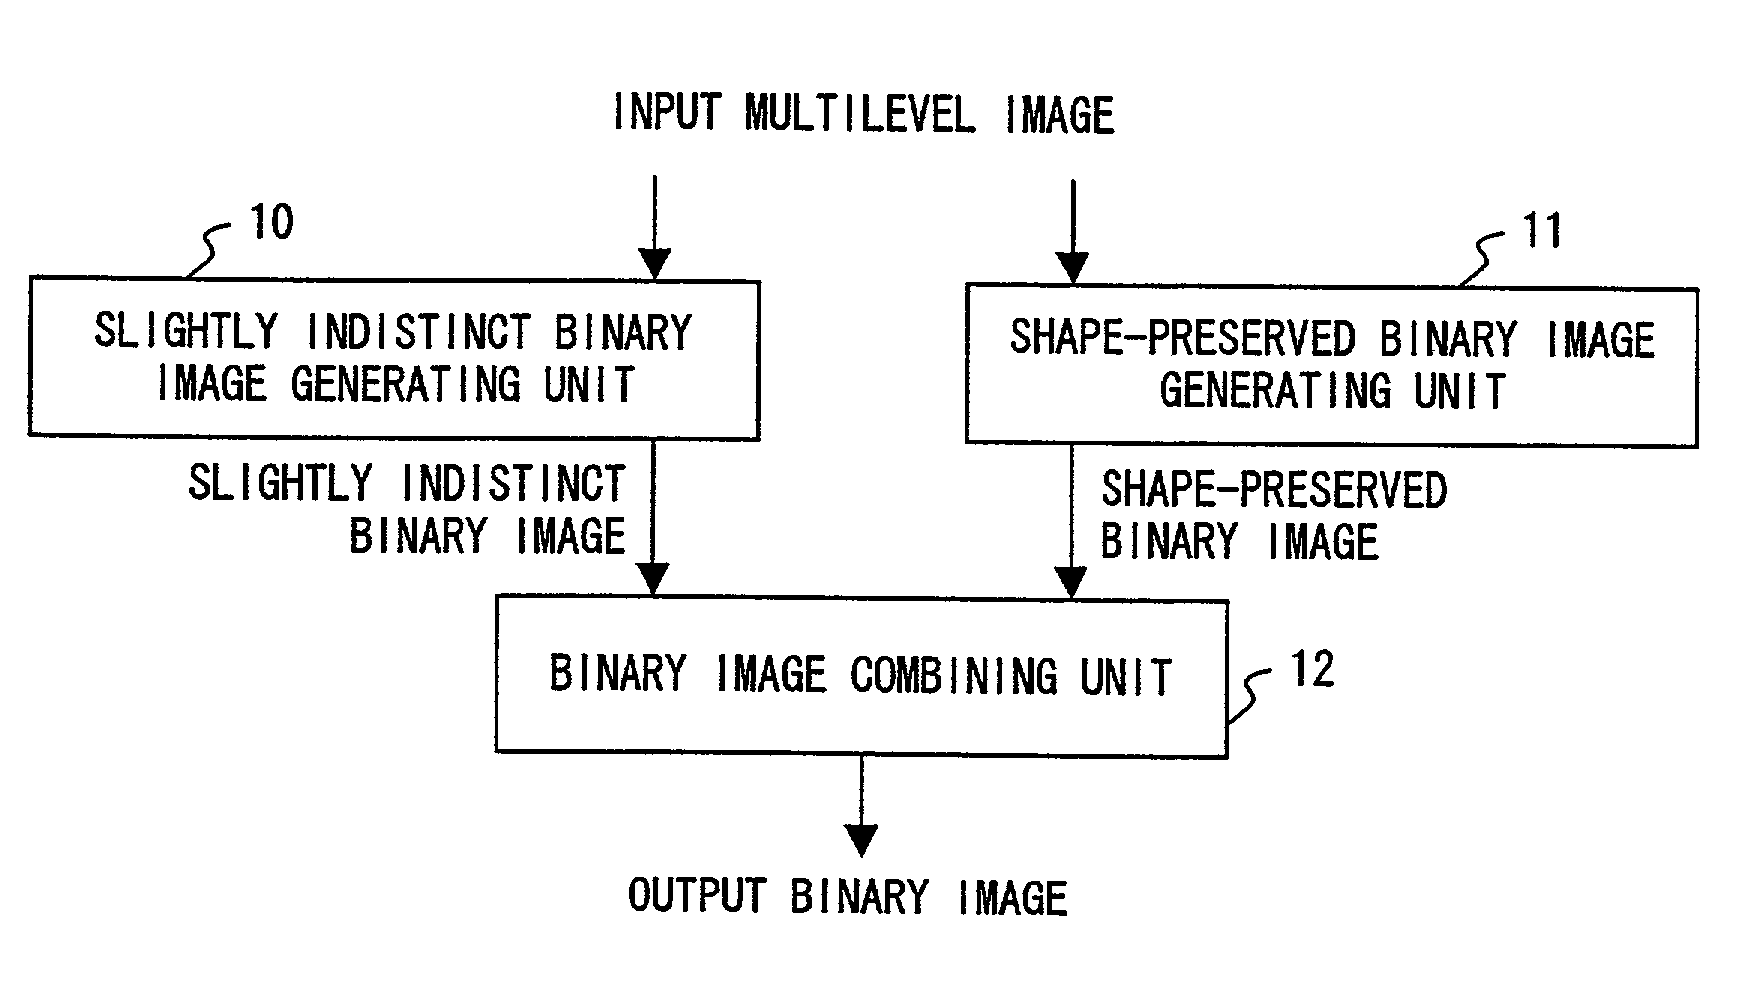 Image processing apparatus